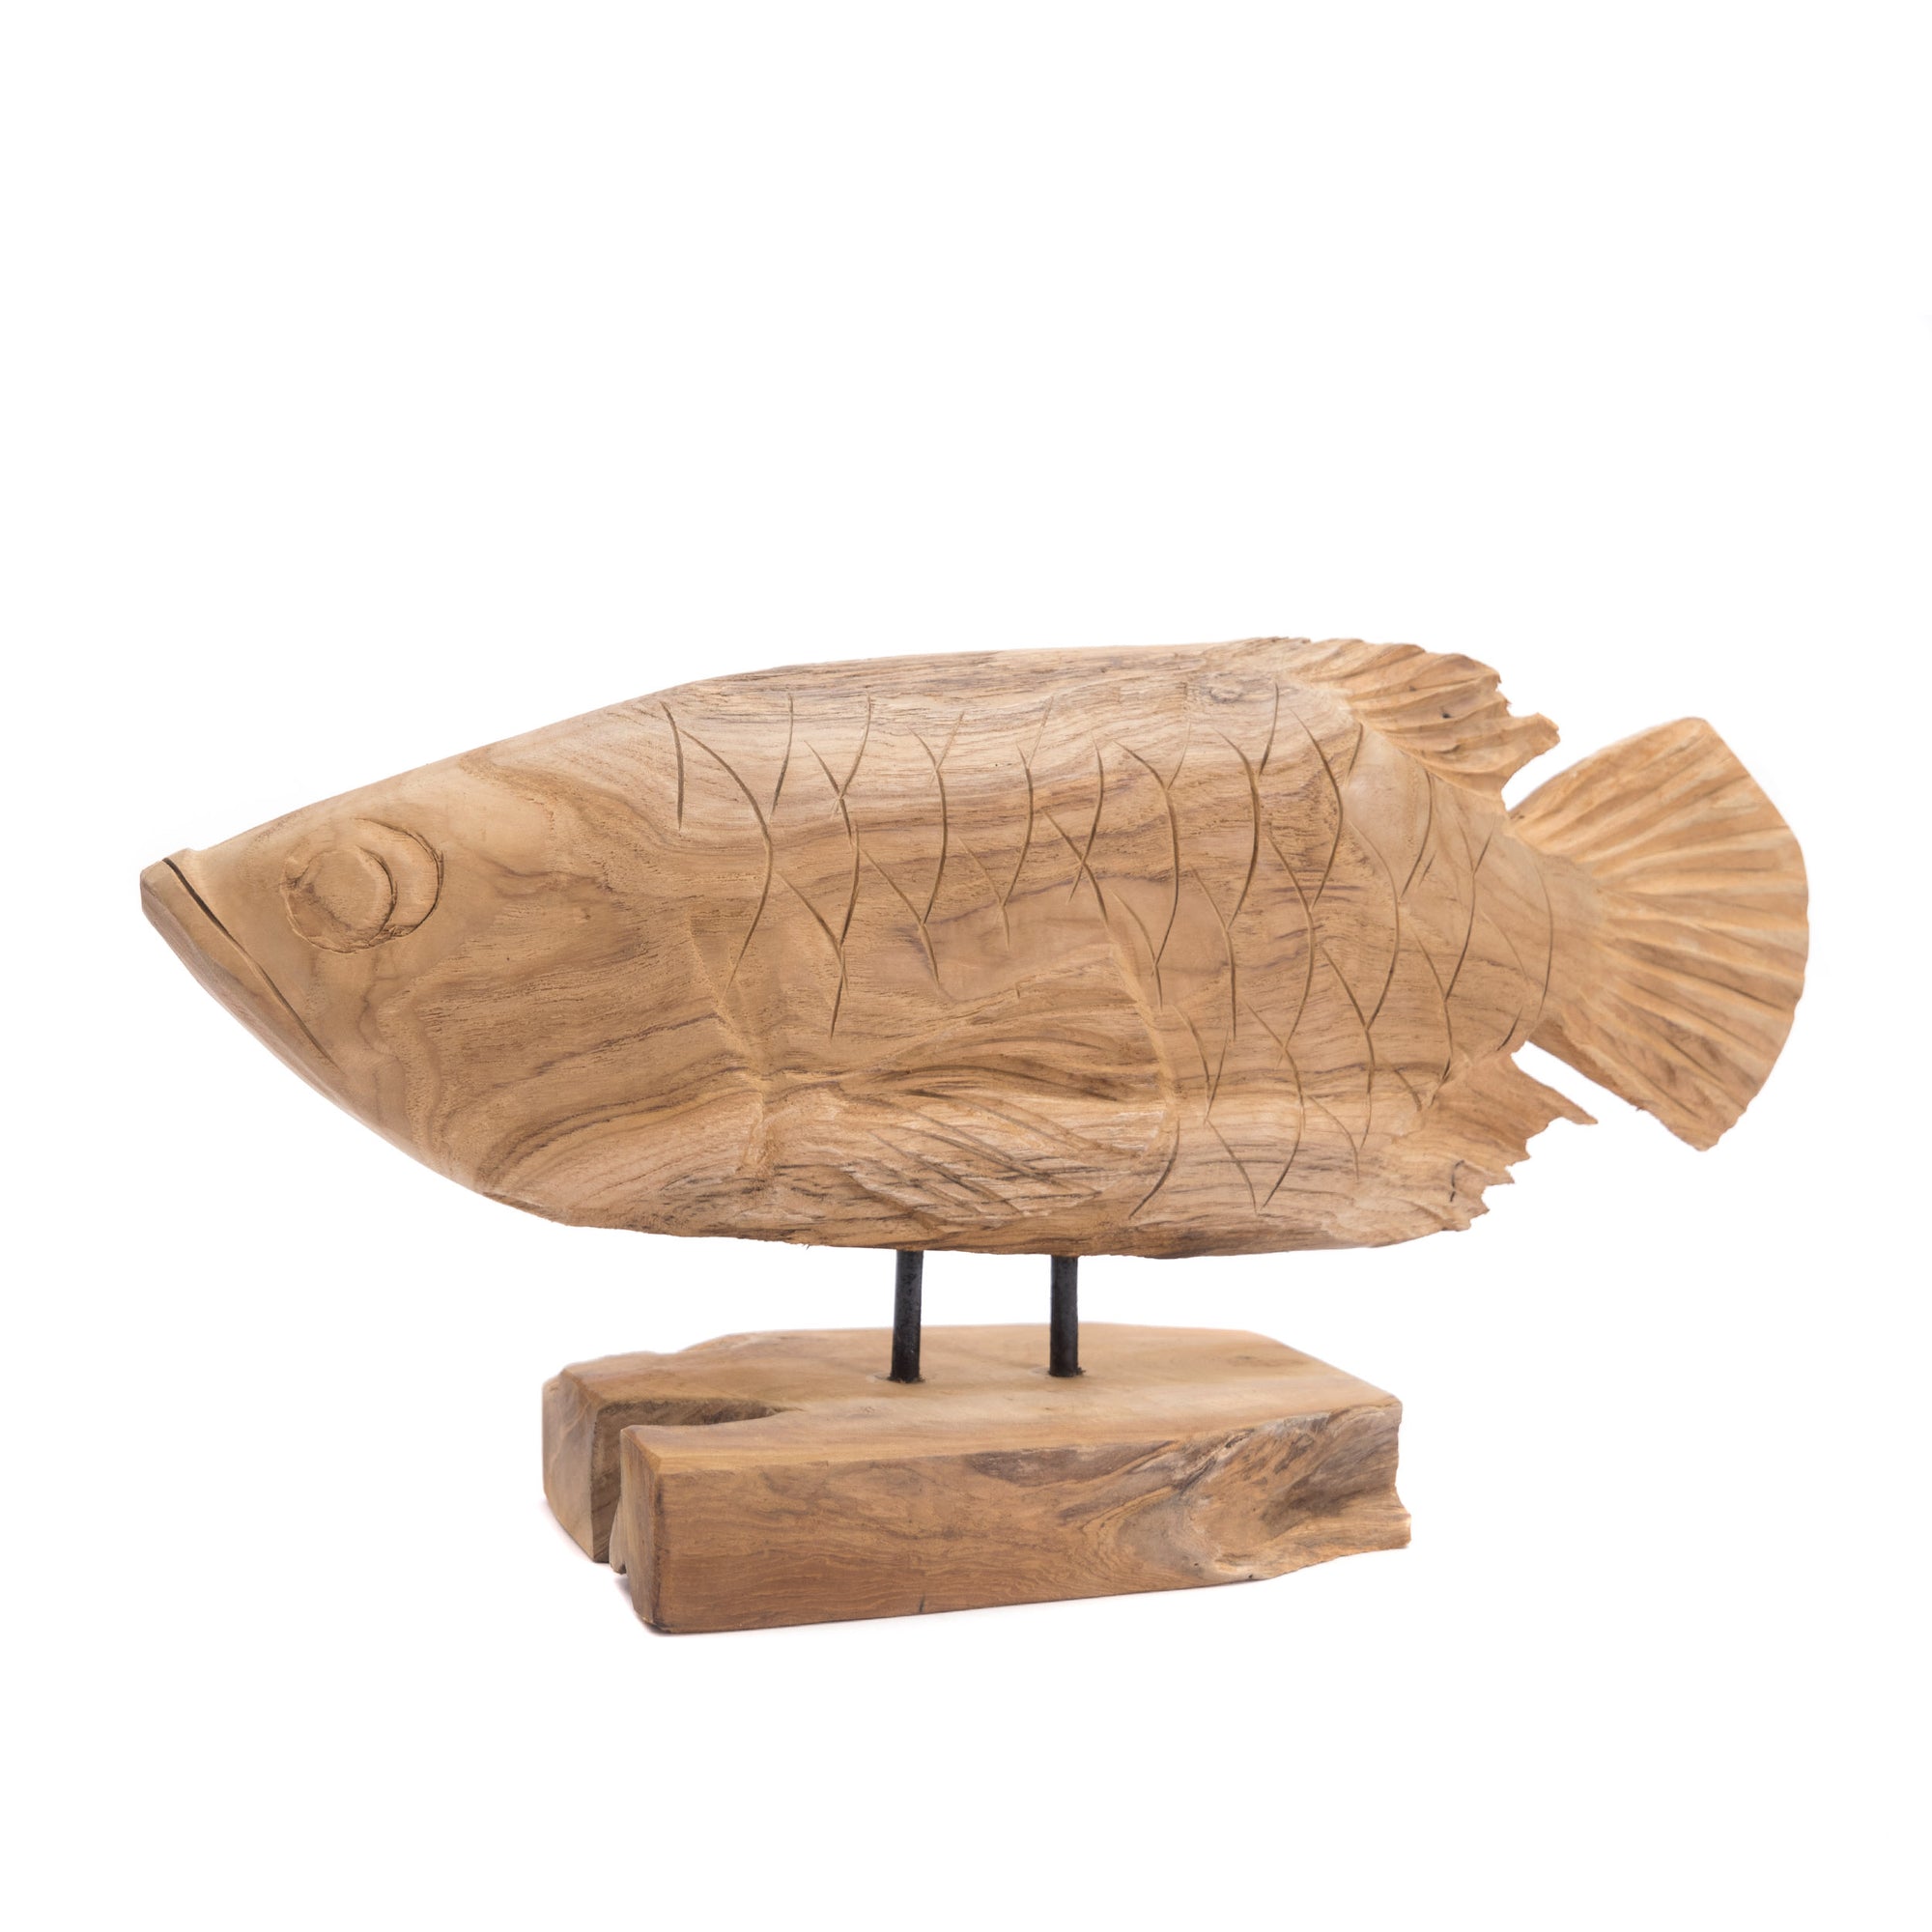 FISCH SKULPTUR "ROOT FISH" | 55 cm, Teak | Wurzelholz Figur